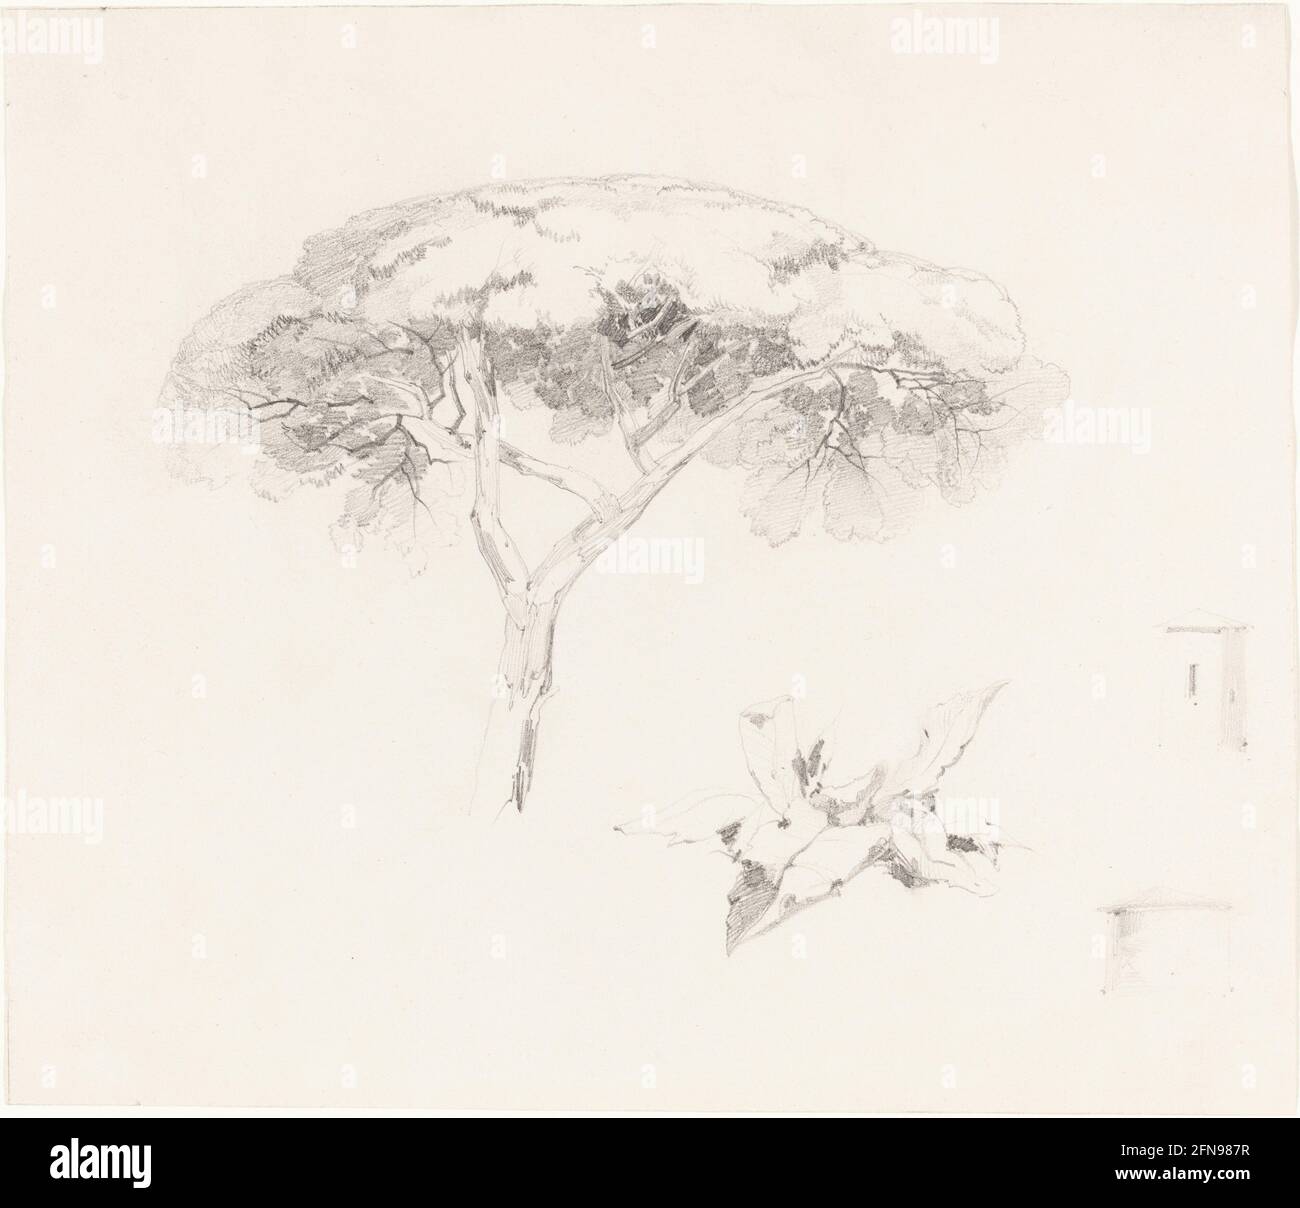 Umbrella Pine and Other Studies, 1839/1845. Stock Photo